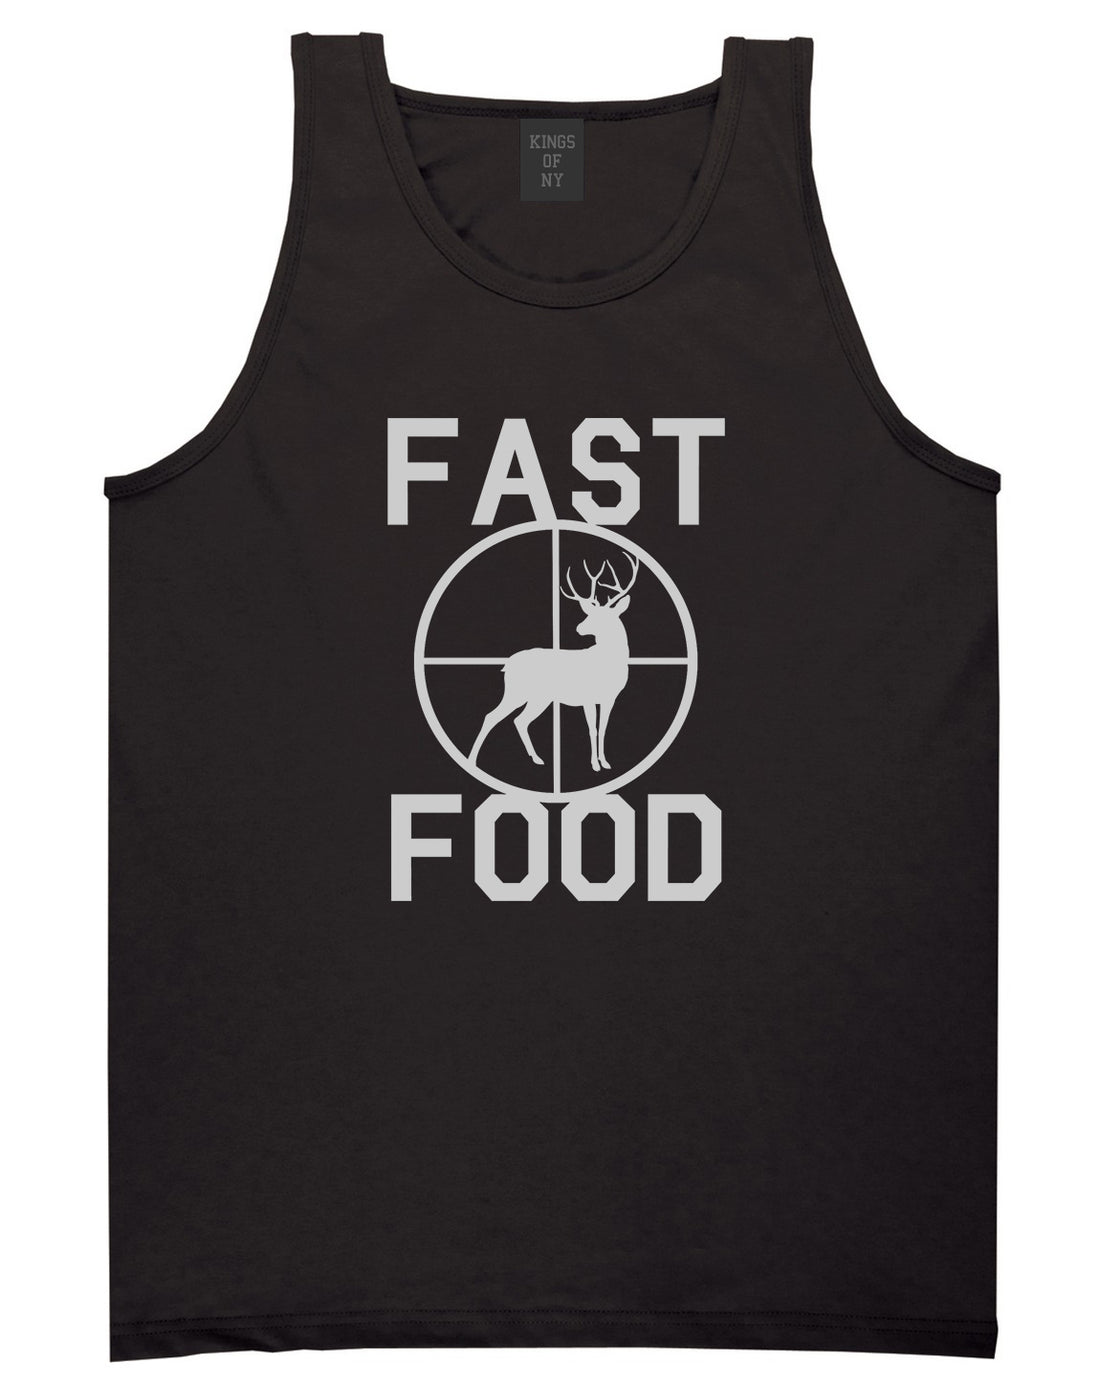 Fast Food Deer Hunting Mens Black Tank Top Shirt by KINGS OF NY